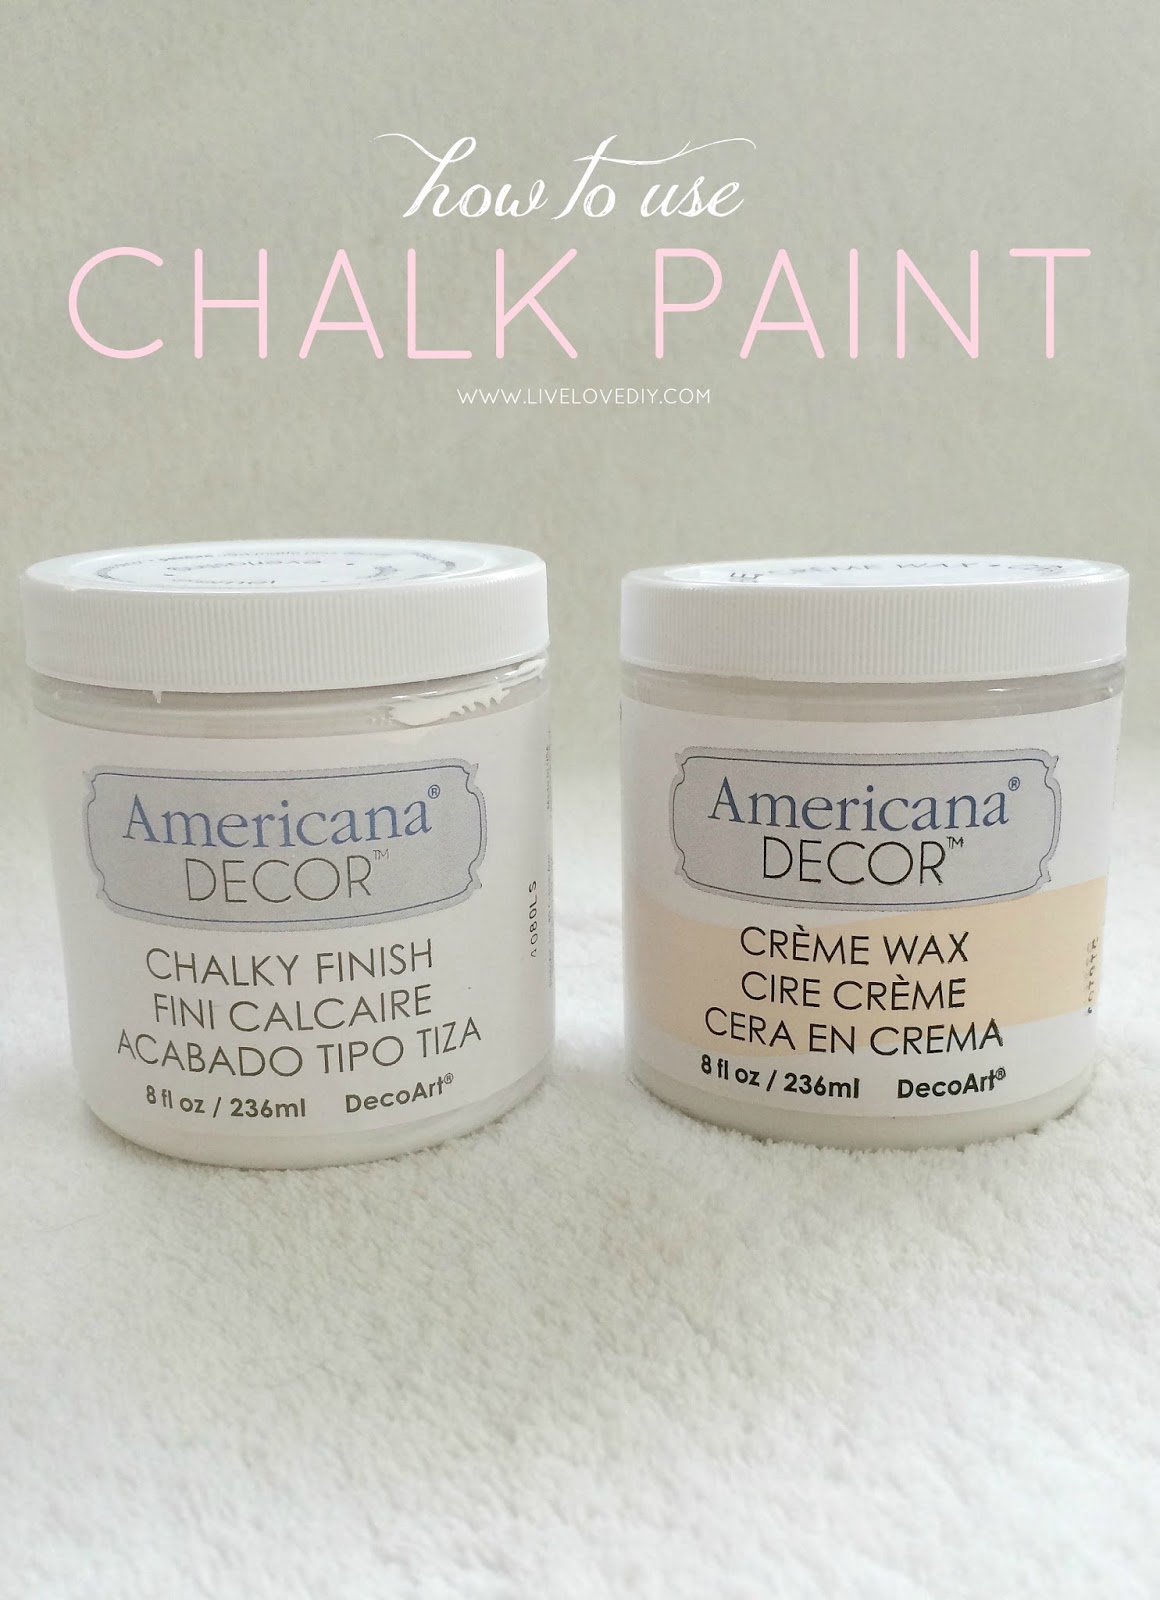 HOW TO USE americana decor chalk paint